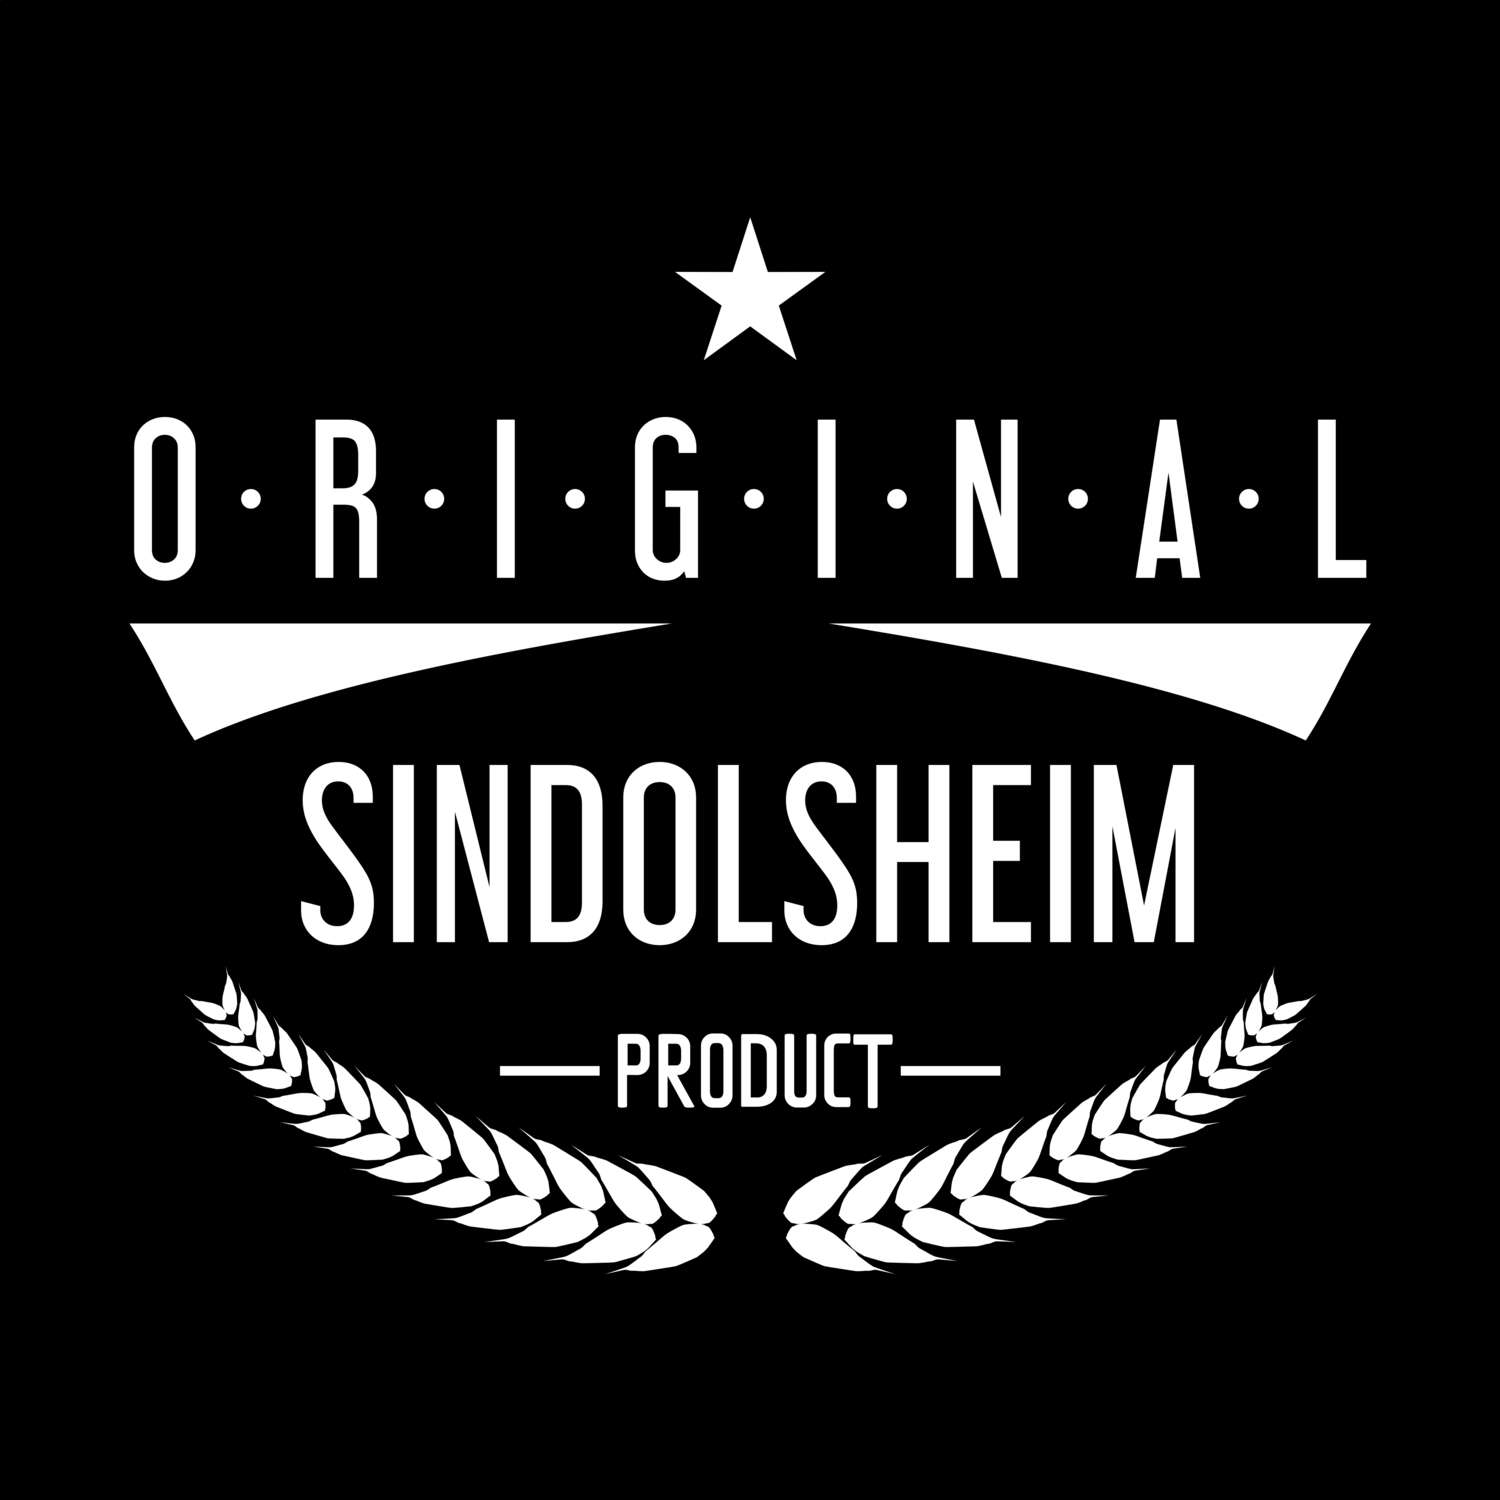 Sindolsheim T-Shirt »Original Product«